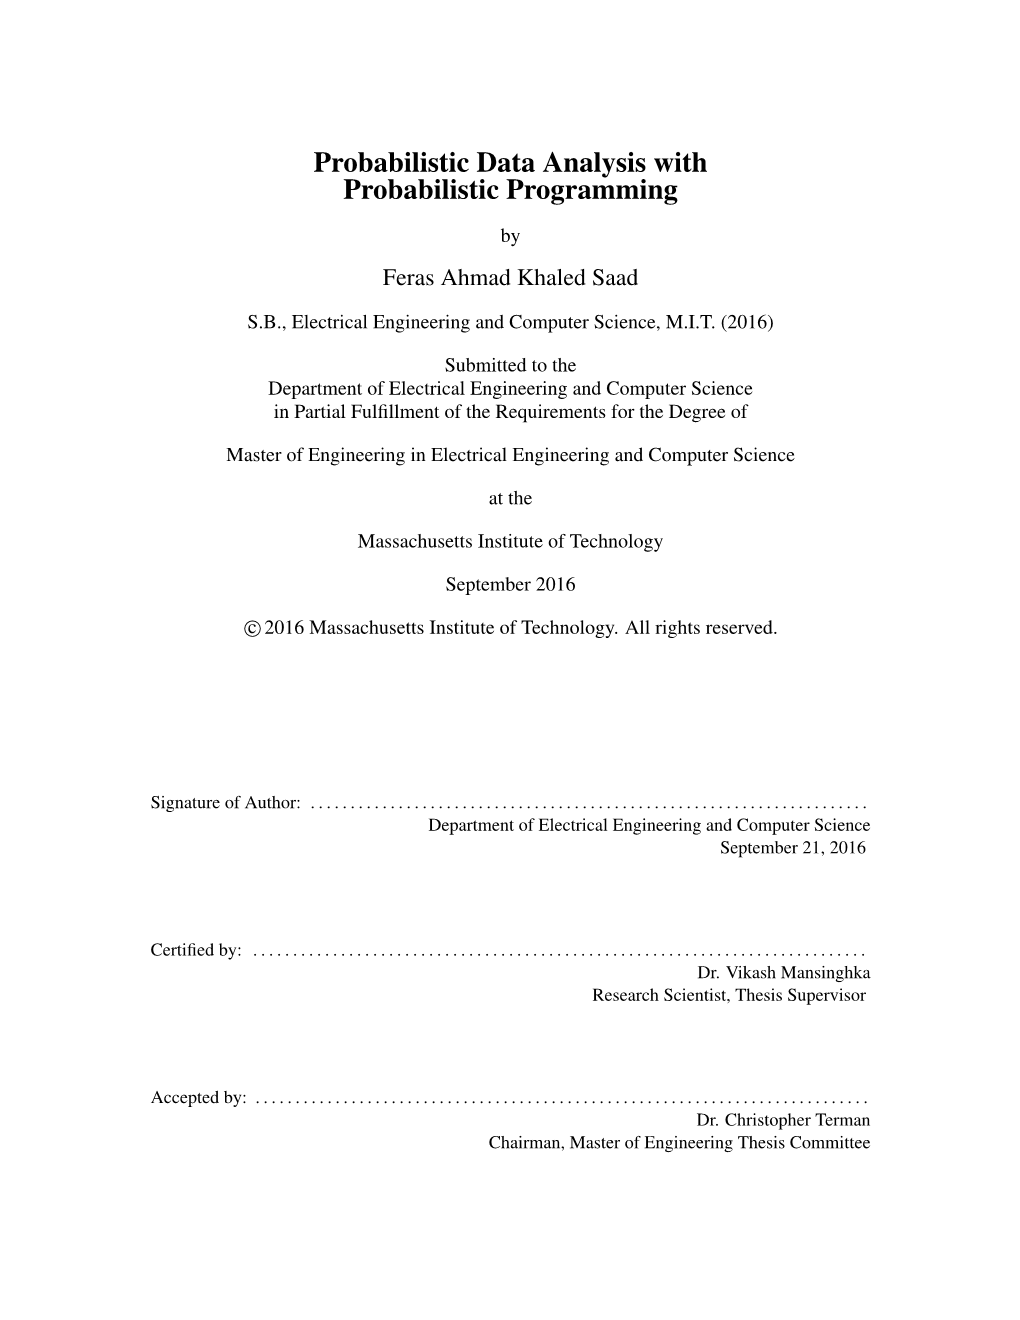 Probabilistic Data Analysis with Probabilistic Programming